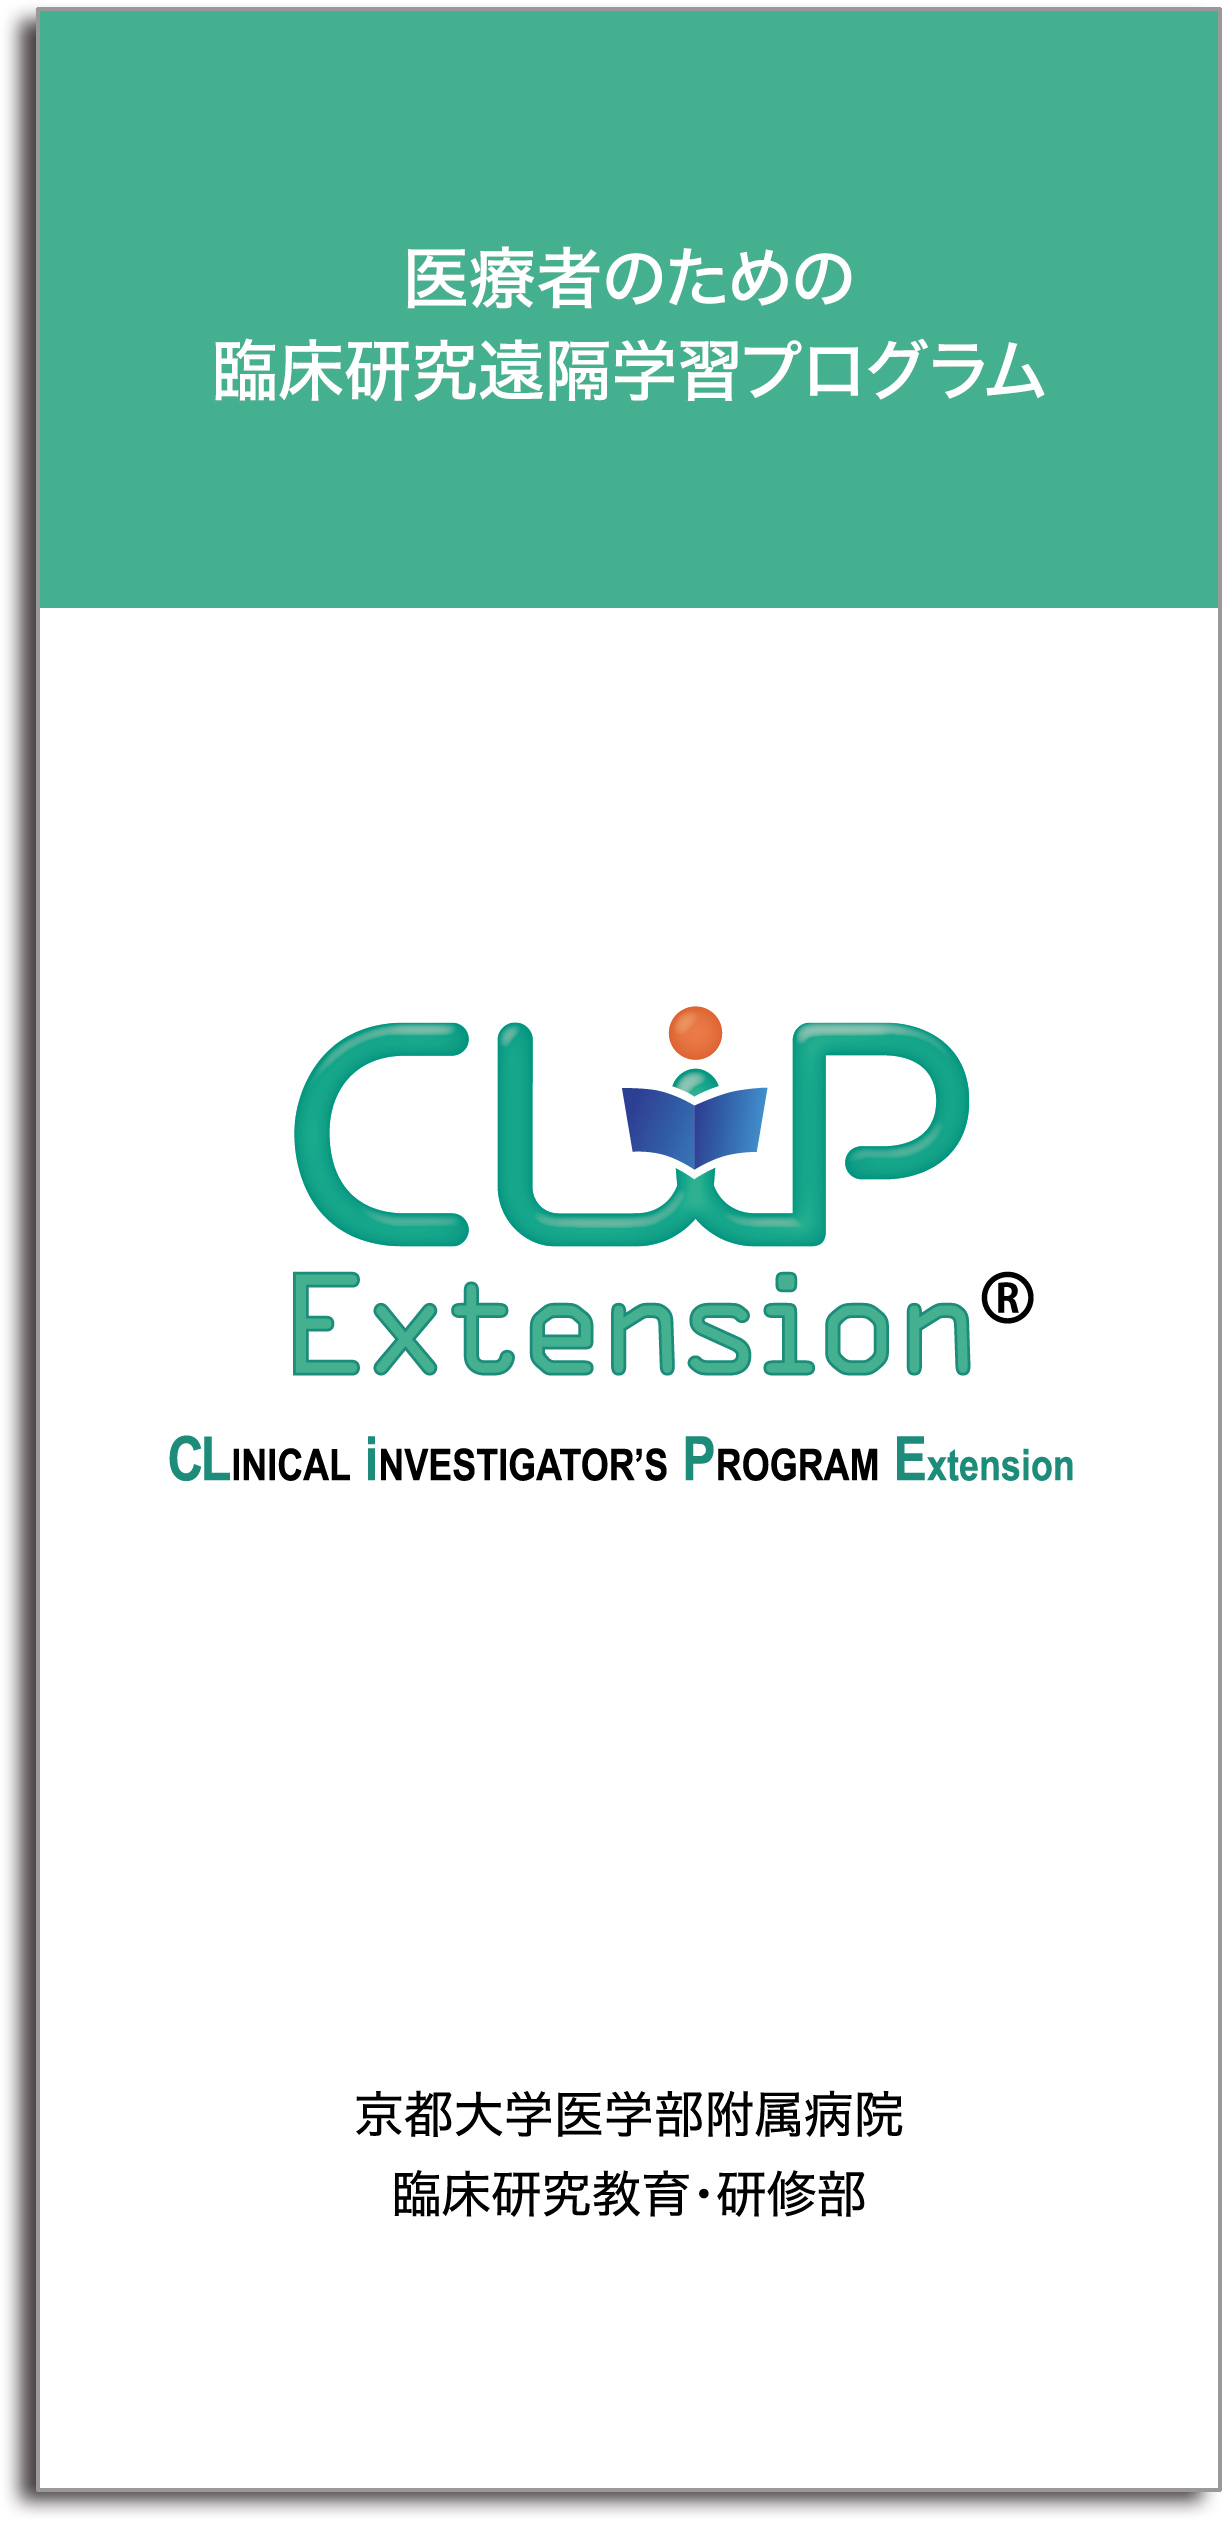 CLiP Extension案内パンフレット